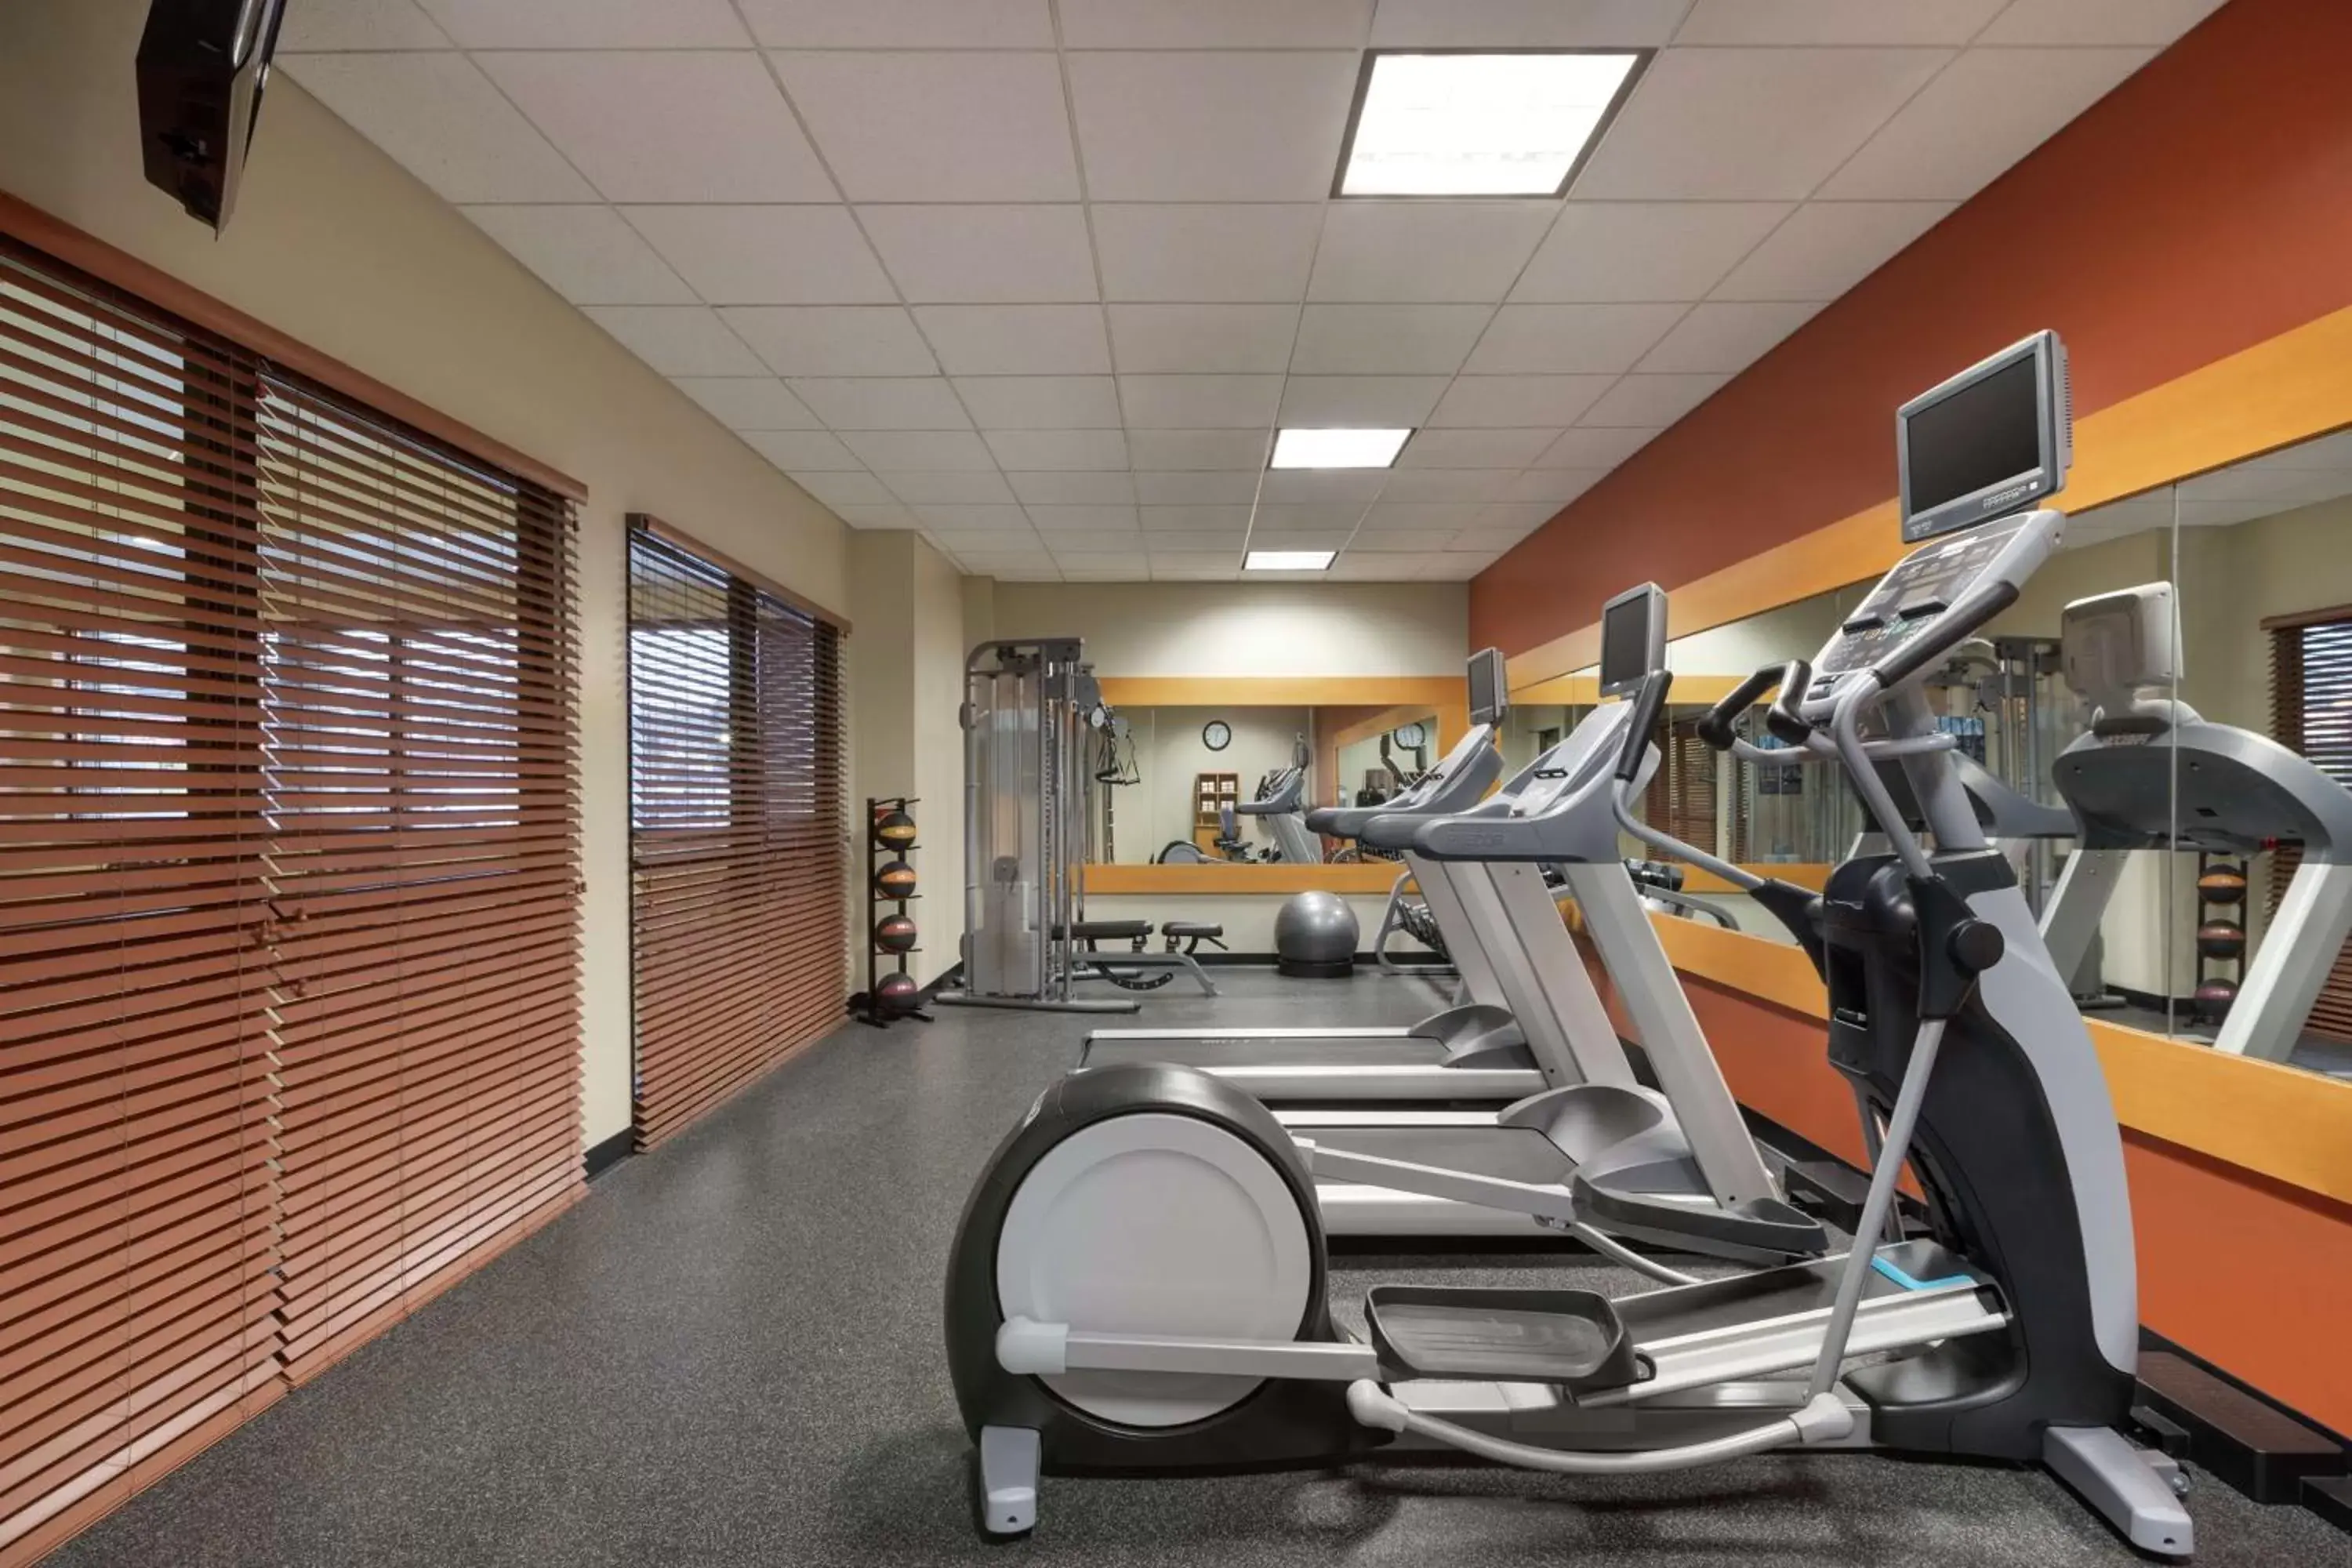 Fitness centre/facilities, Fitness Center/Facilities in Hilton Garden Inn Troy